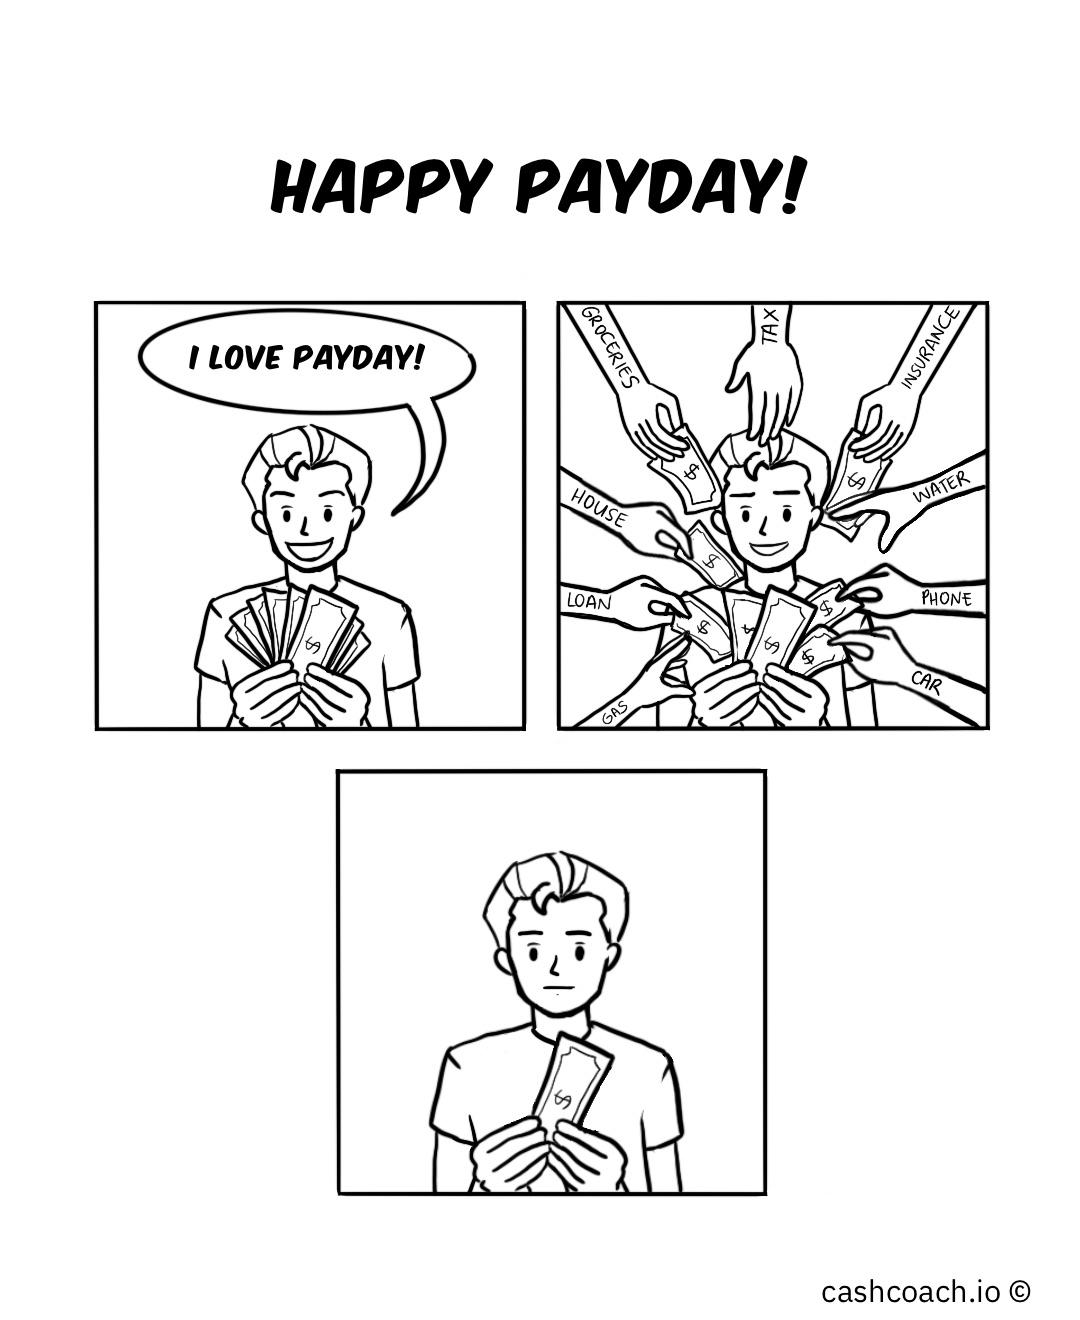 comics comics comics text: VAPPY PAYDAY! LOVE PAYDAY! LOAN PHONE coq cashcoach.io @ 